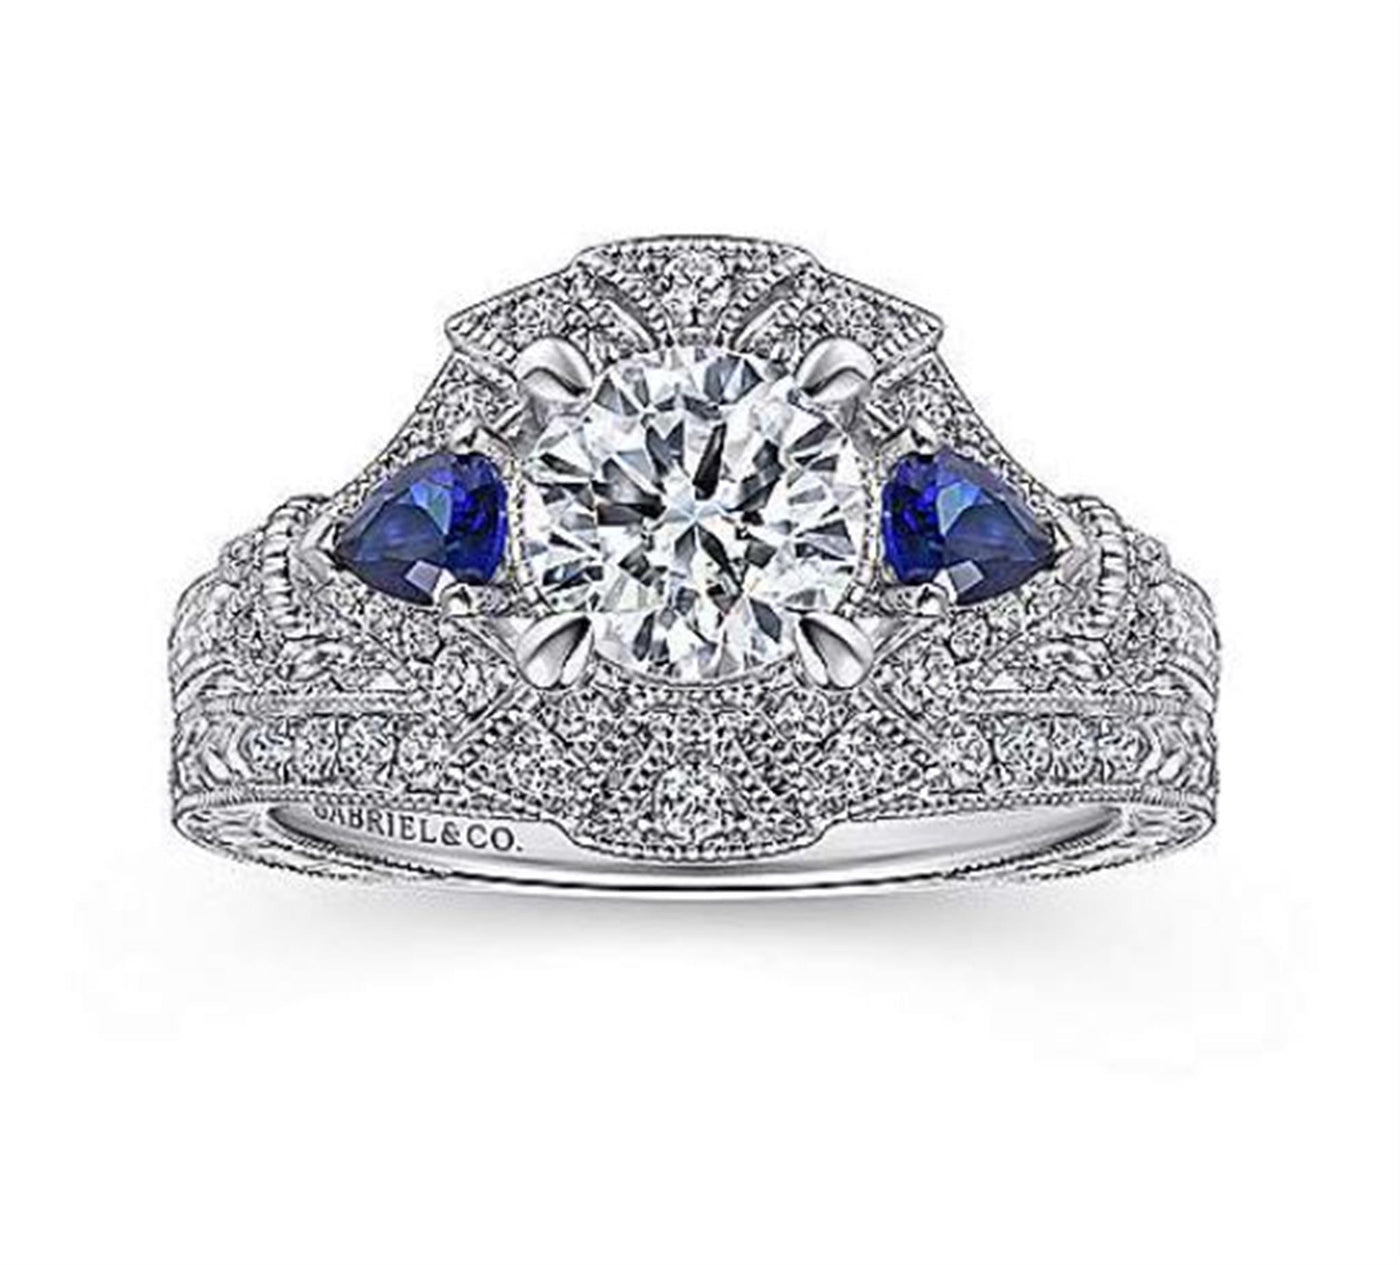 Gabriel 14K White Gold .20ctw 4 Prong Style Diamond Semi-Mount Engagement Ring